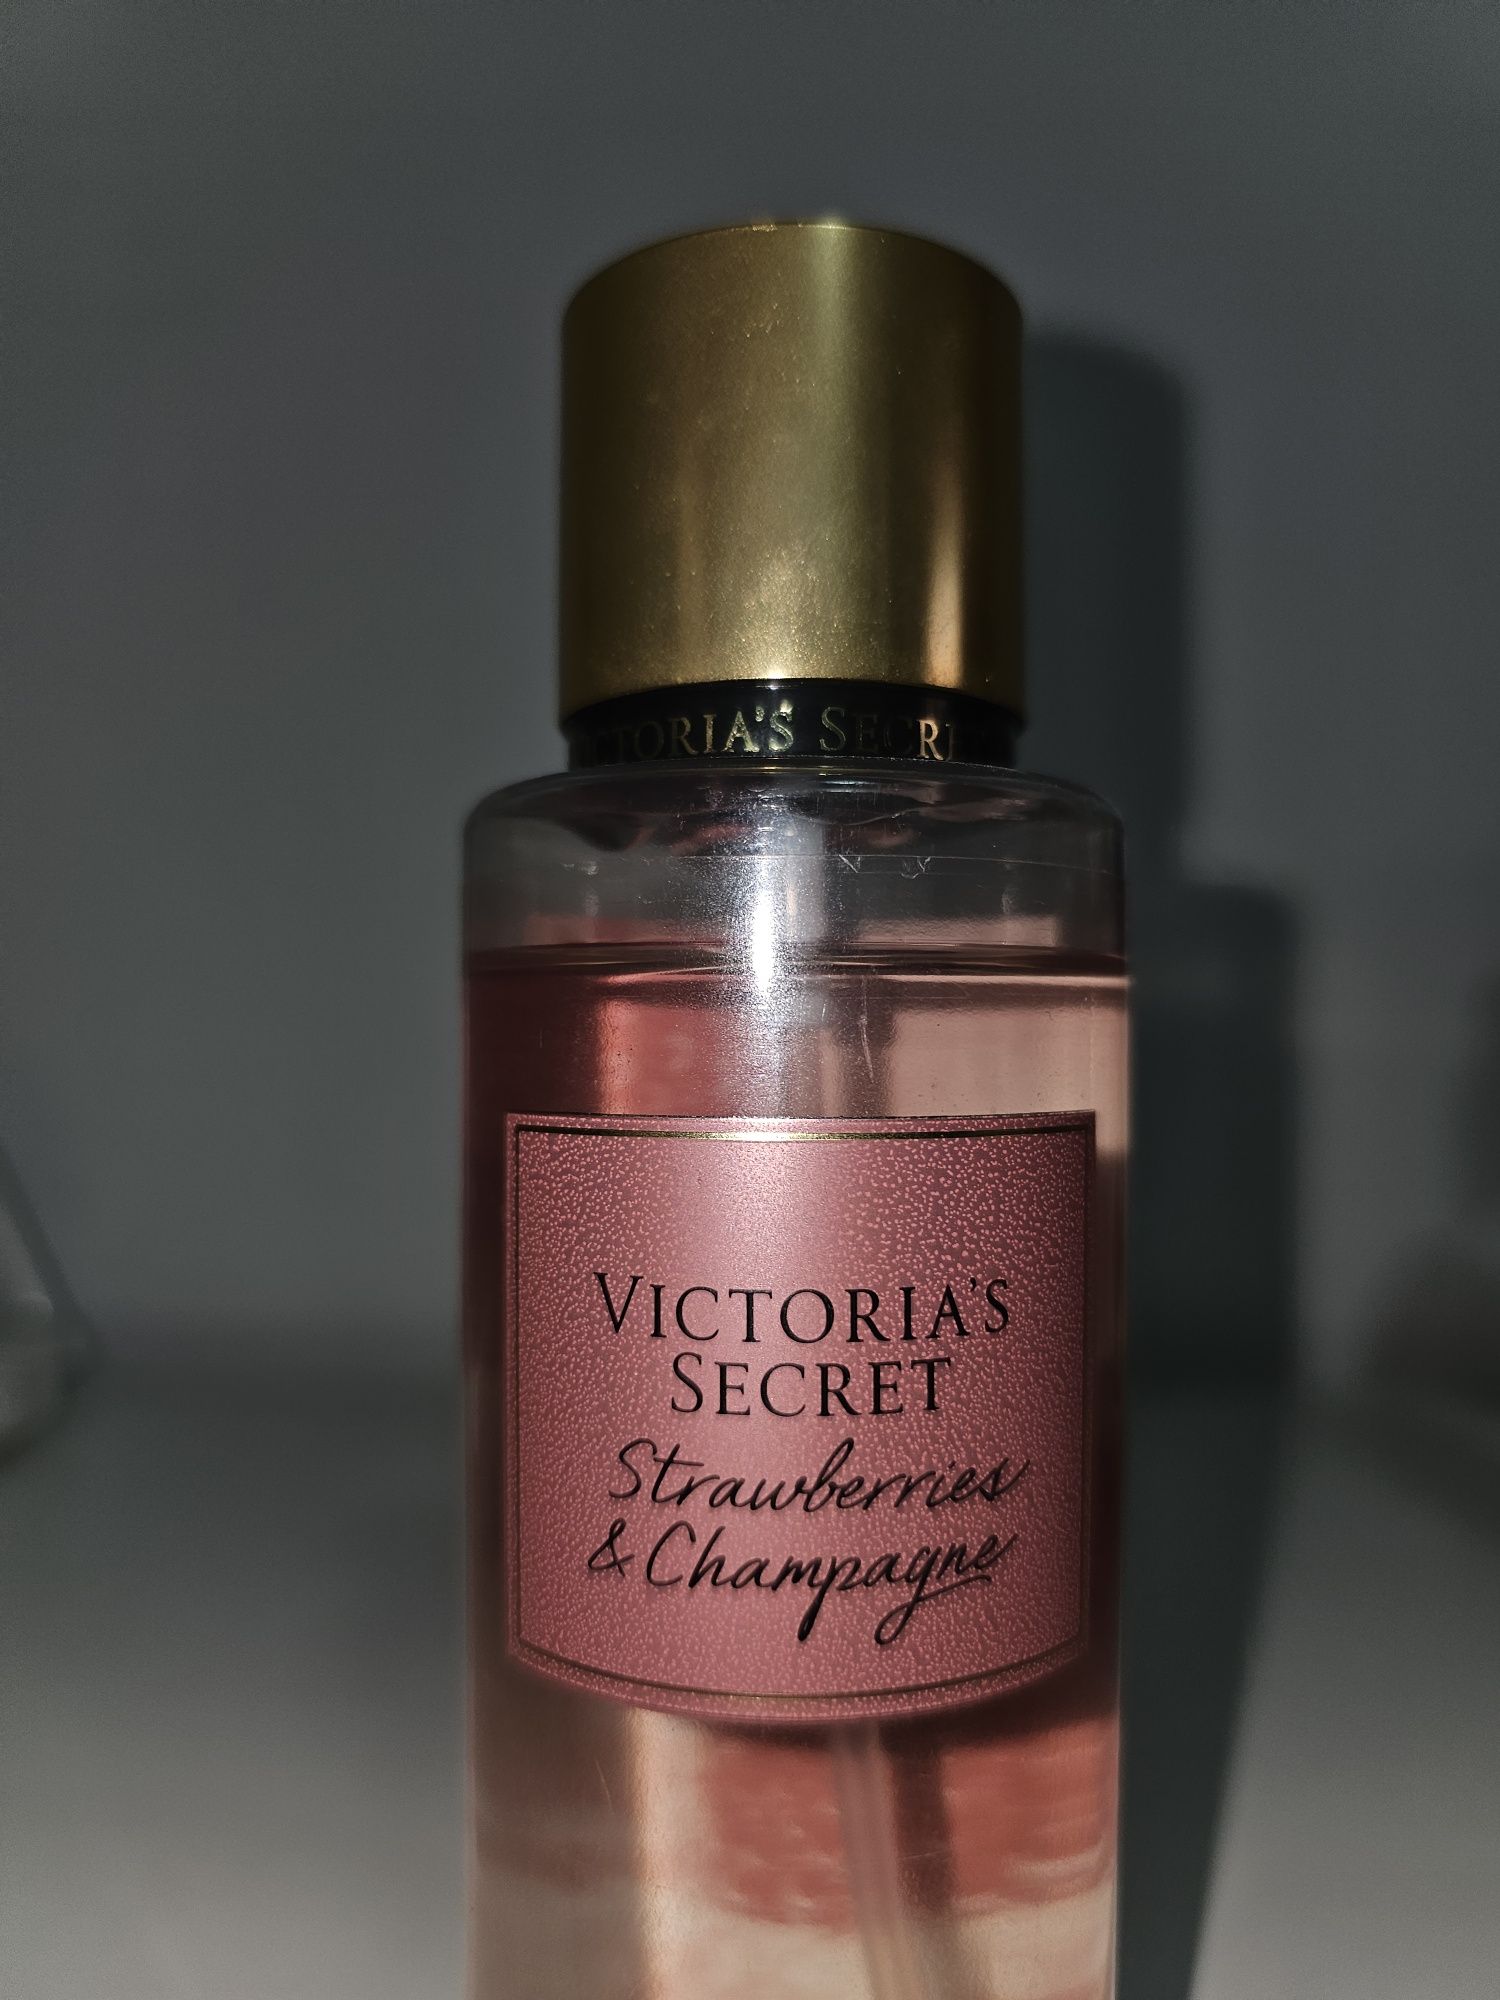 Victoria's Secret Strawberries & Champagne